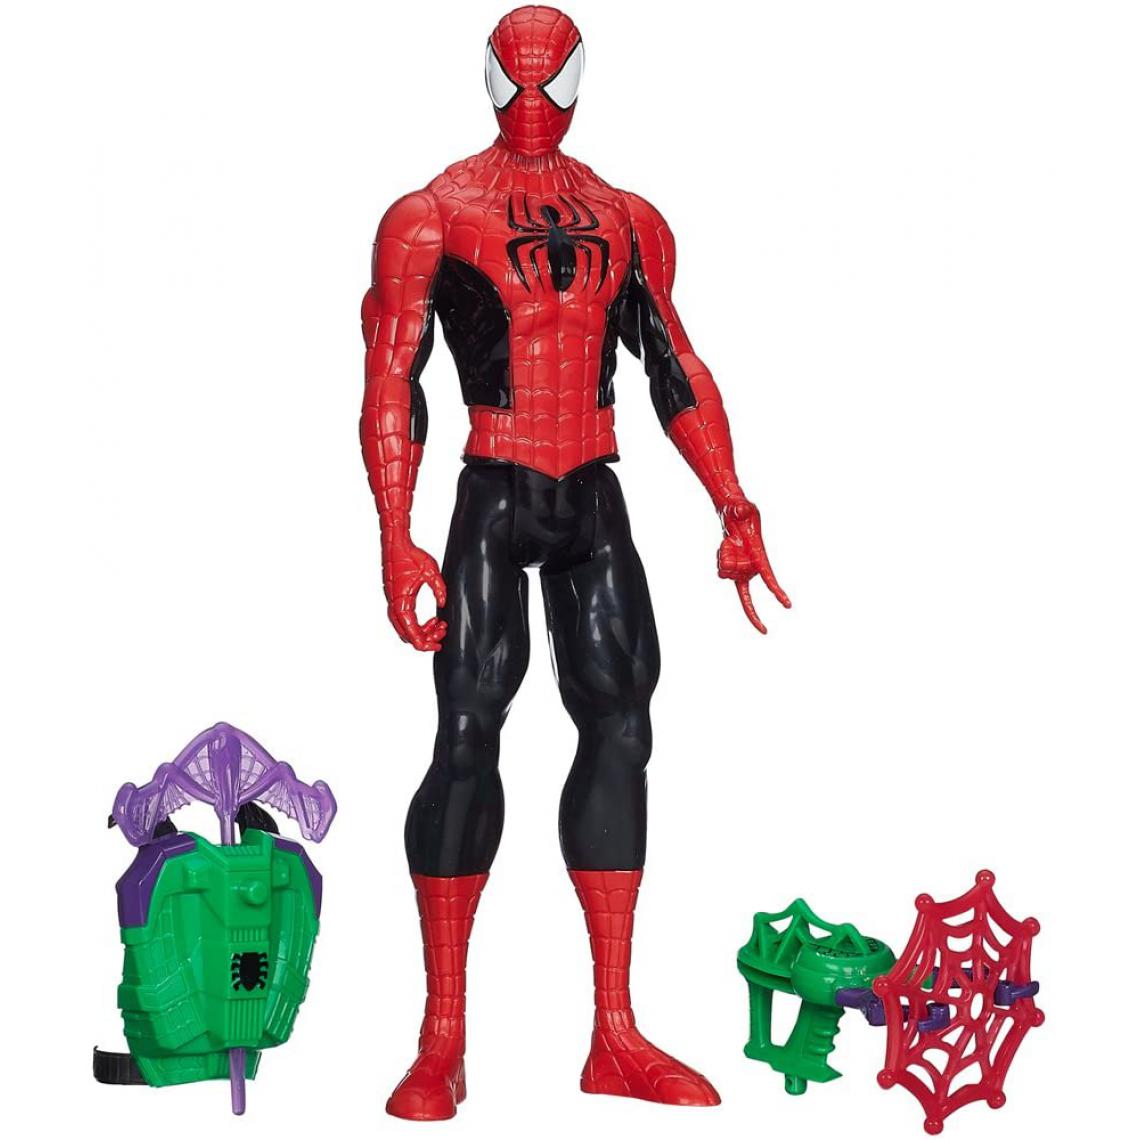 Hasbro - Figurine Spider-Man Titan Heroes Series avec équipement d'attaque Goblin - Films et séries